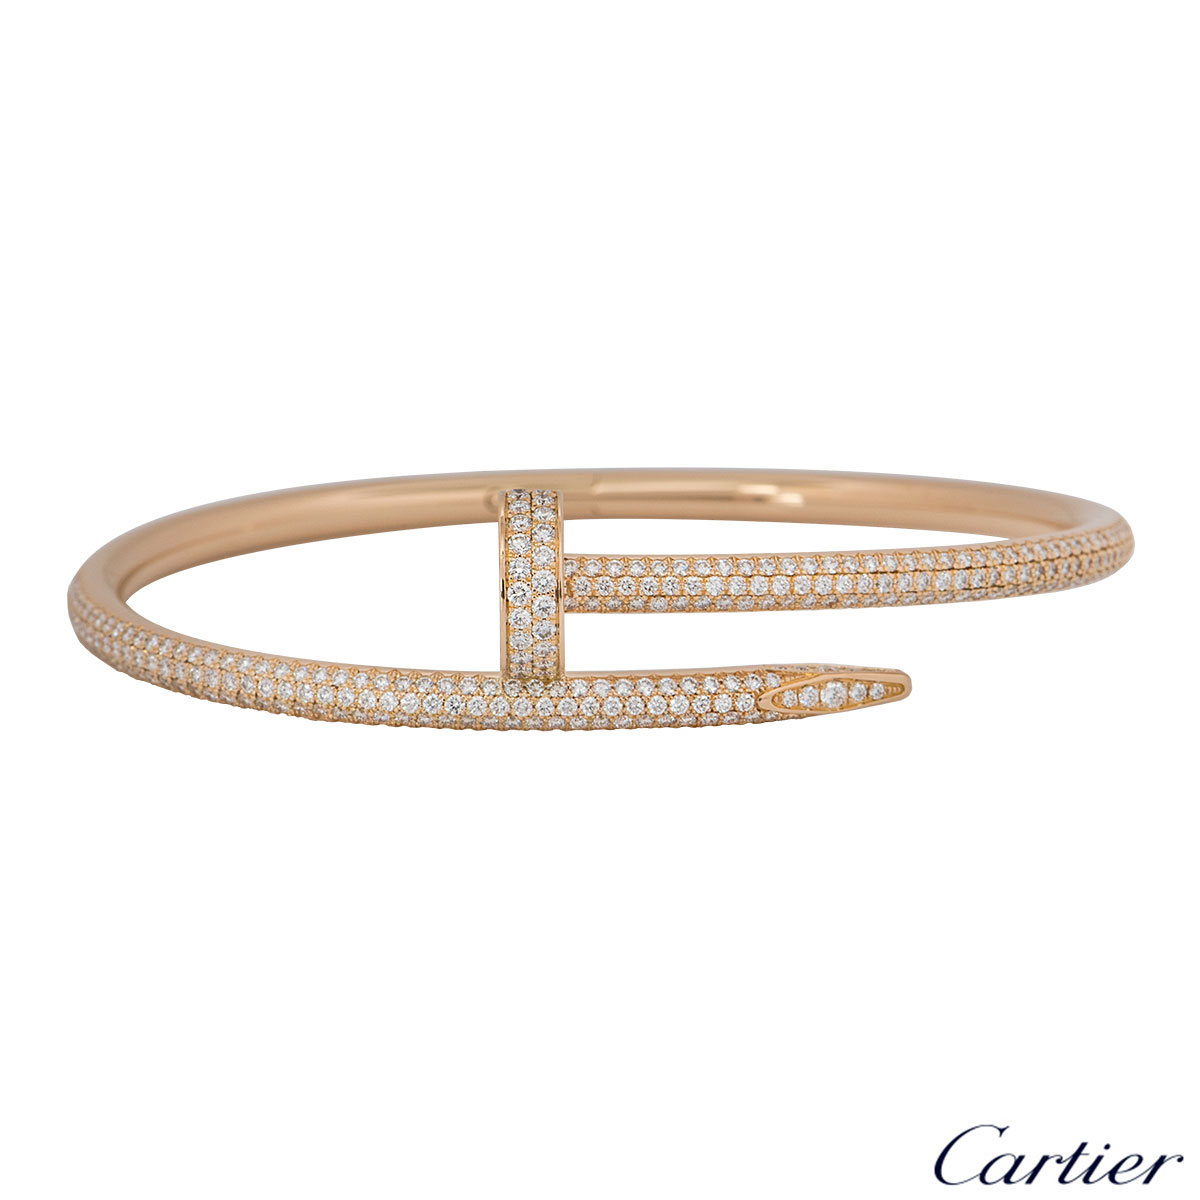 Cartier Rose Gold Diamond Juste Un Clou Bracelet Size 17 N6702117 ...